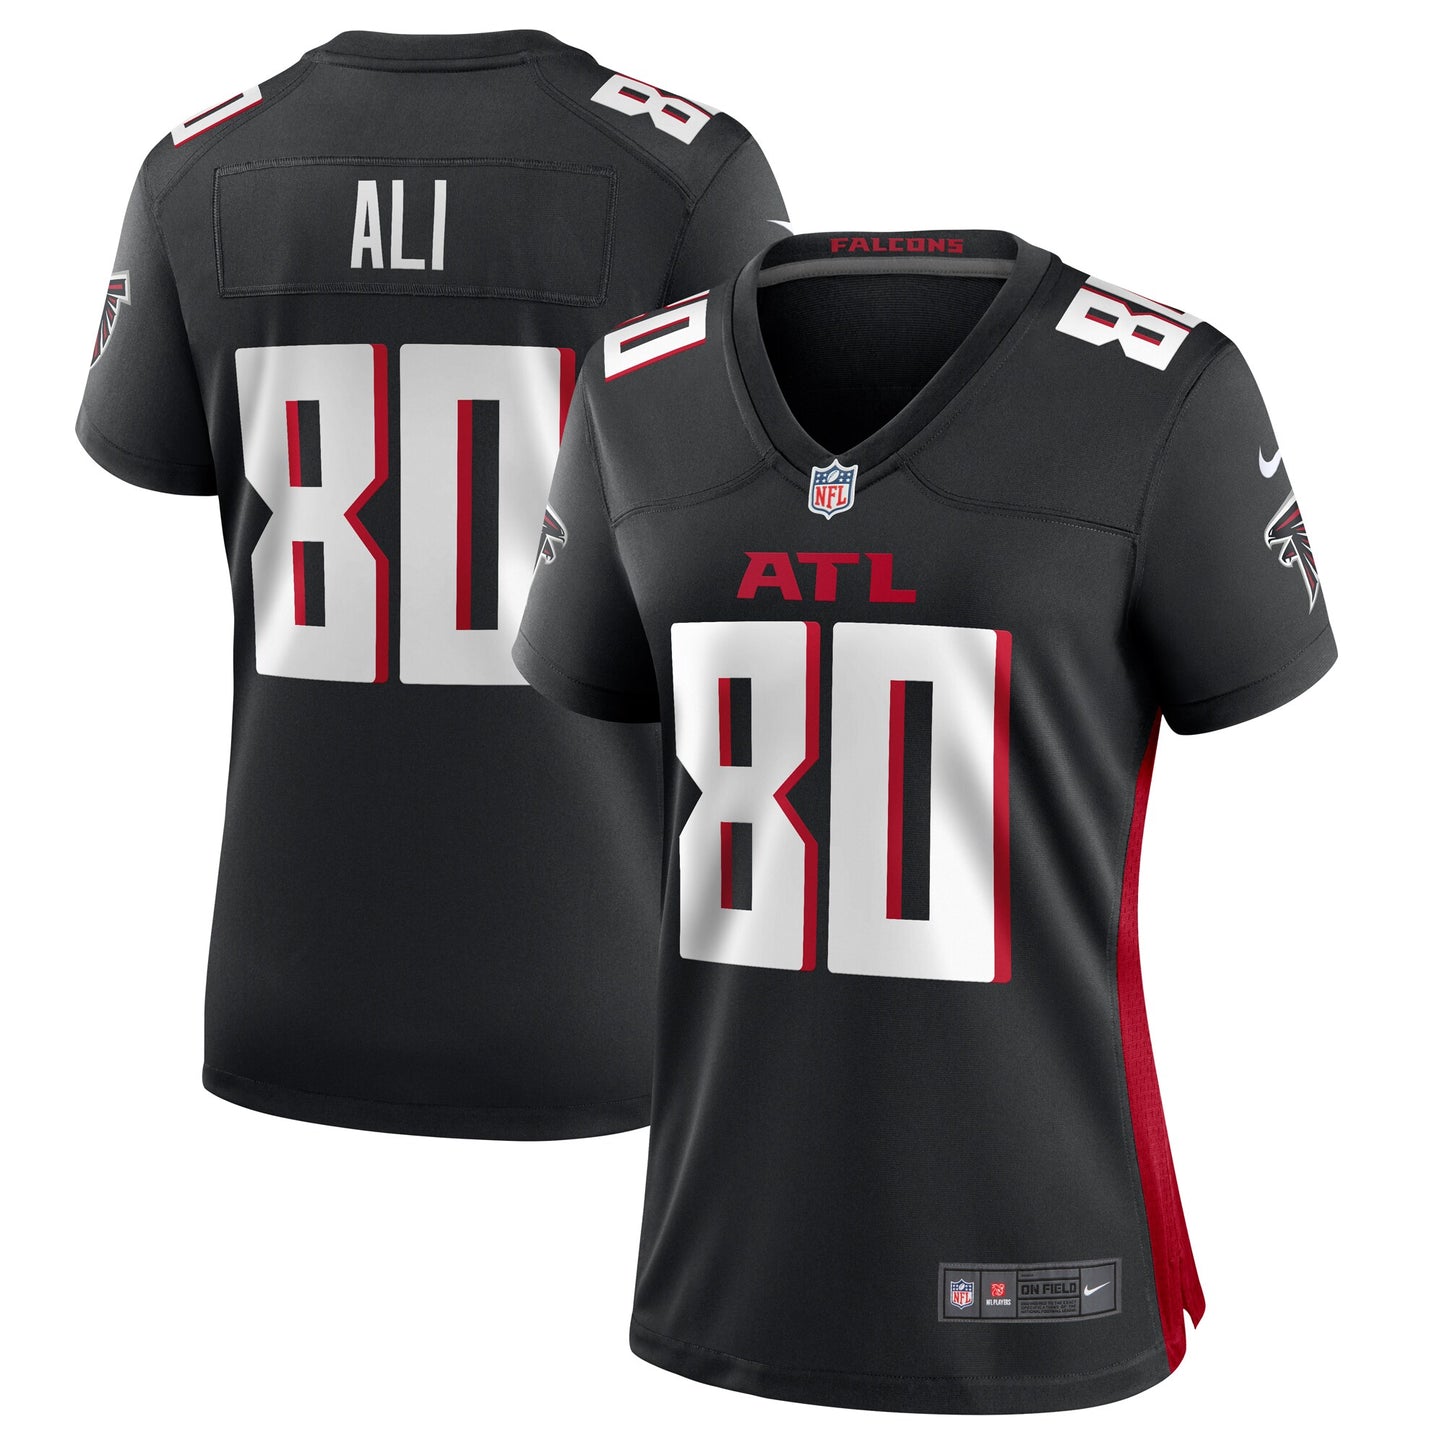 Josh Ali Atlanta Falcons Nike Women's Team Game Jersey - Black